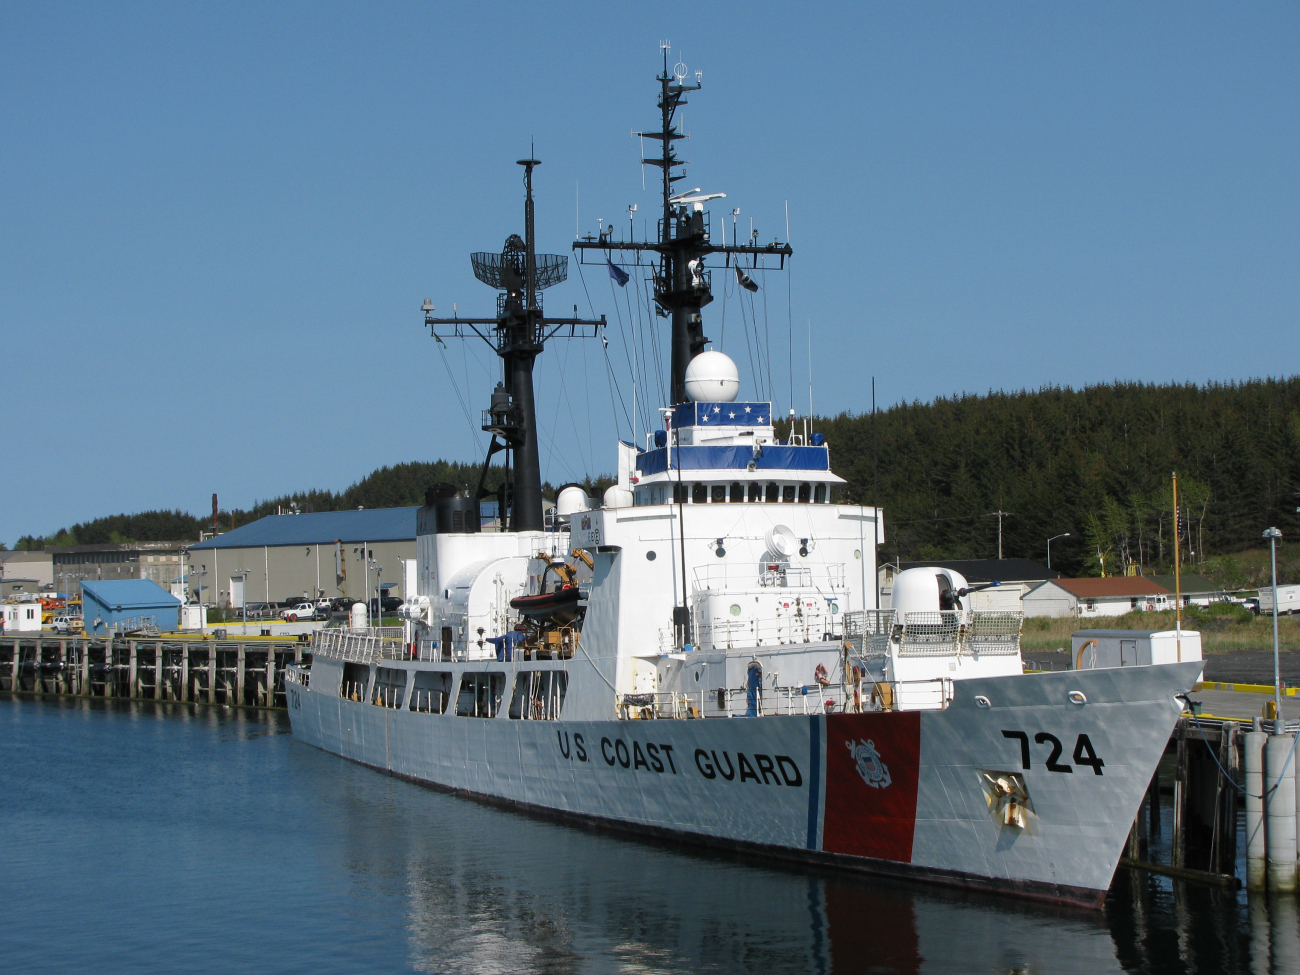 United States Coast Guard high endurance cutter, Hull Number 724